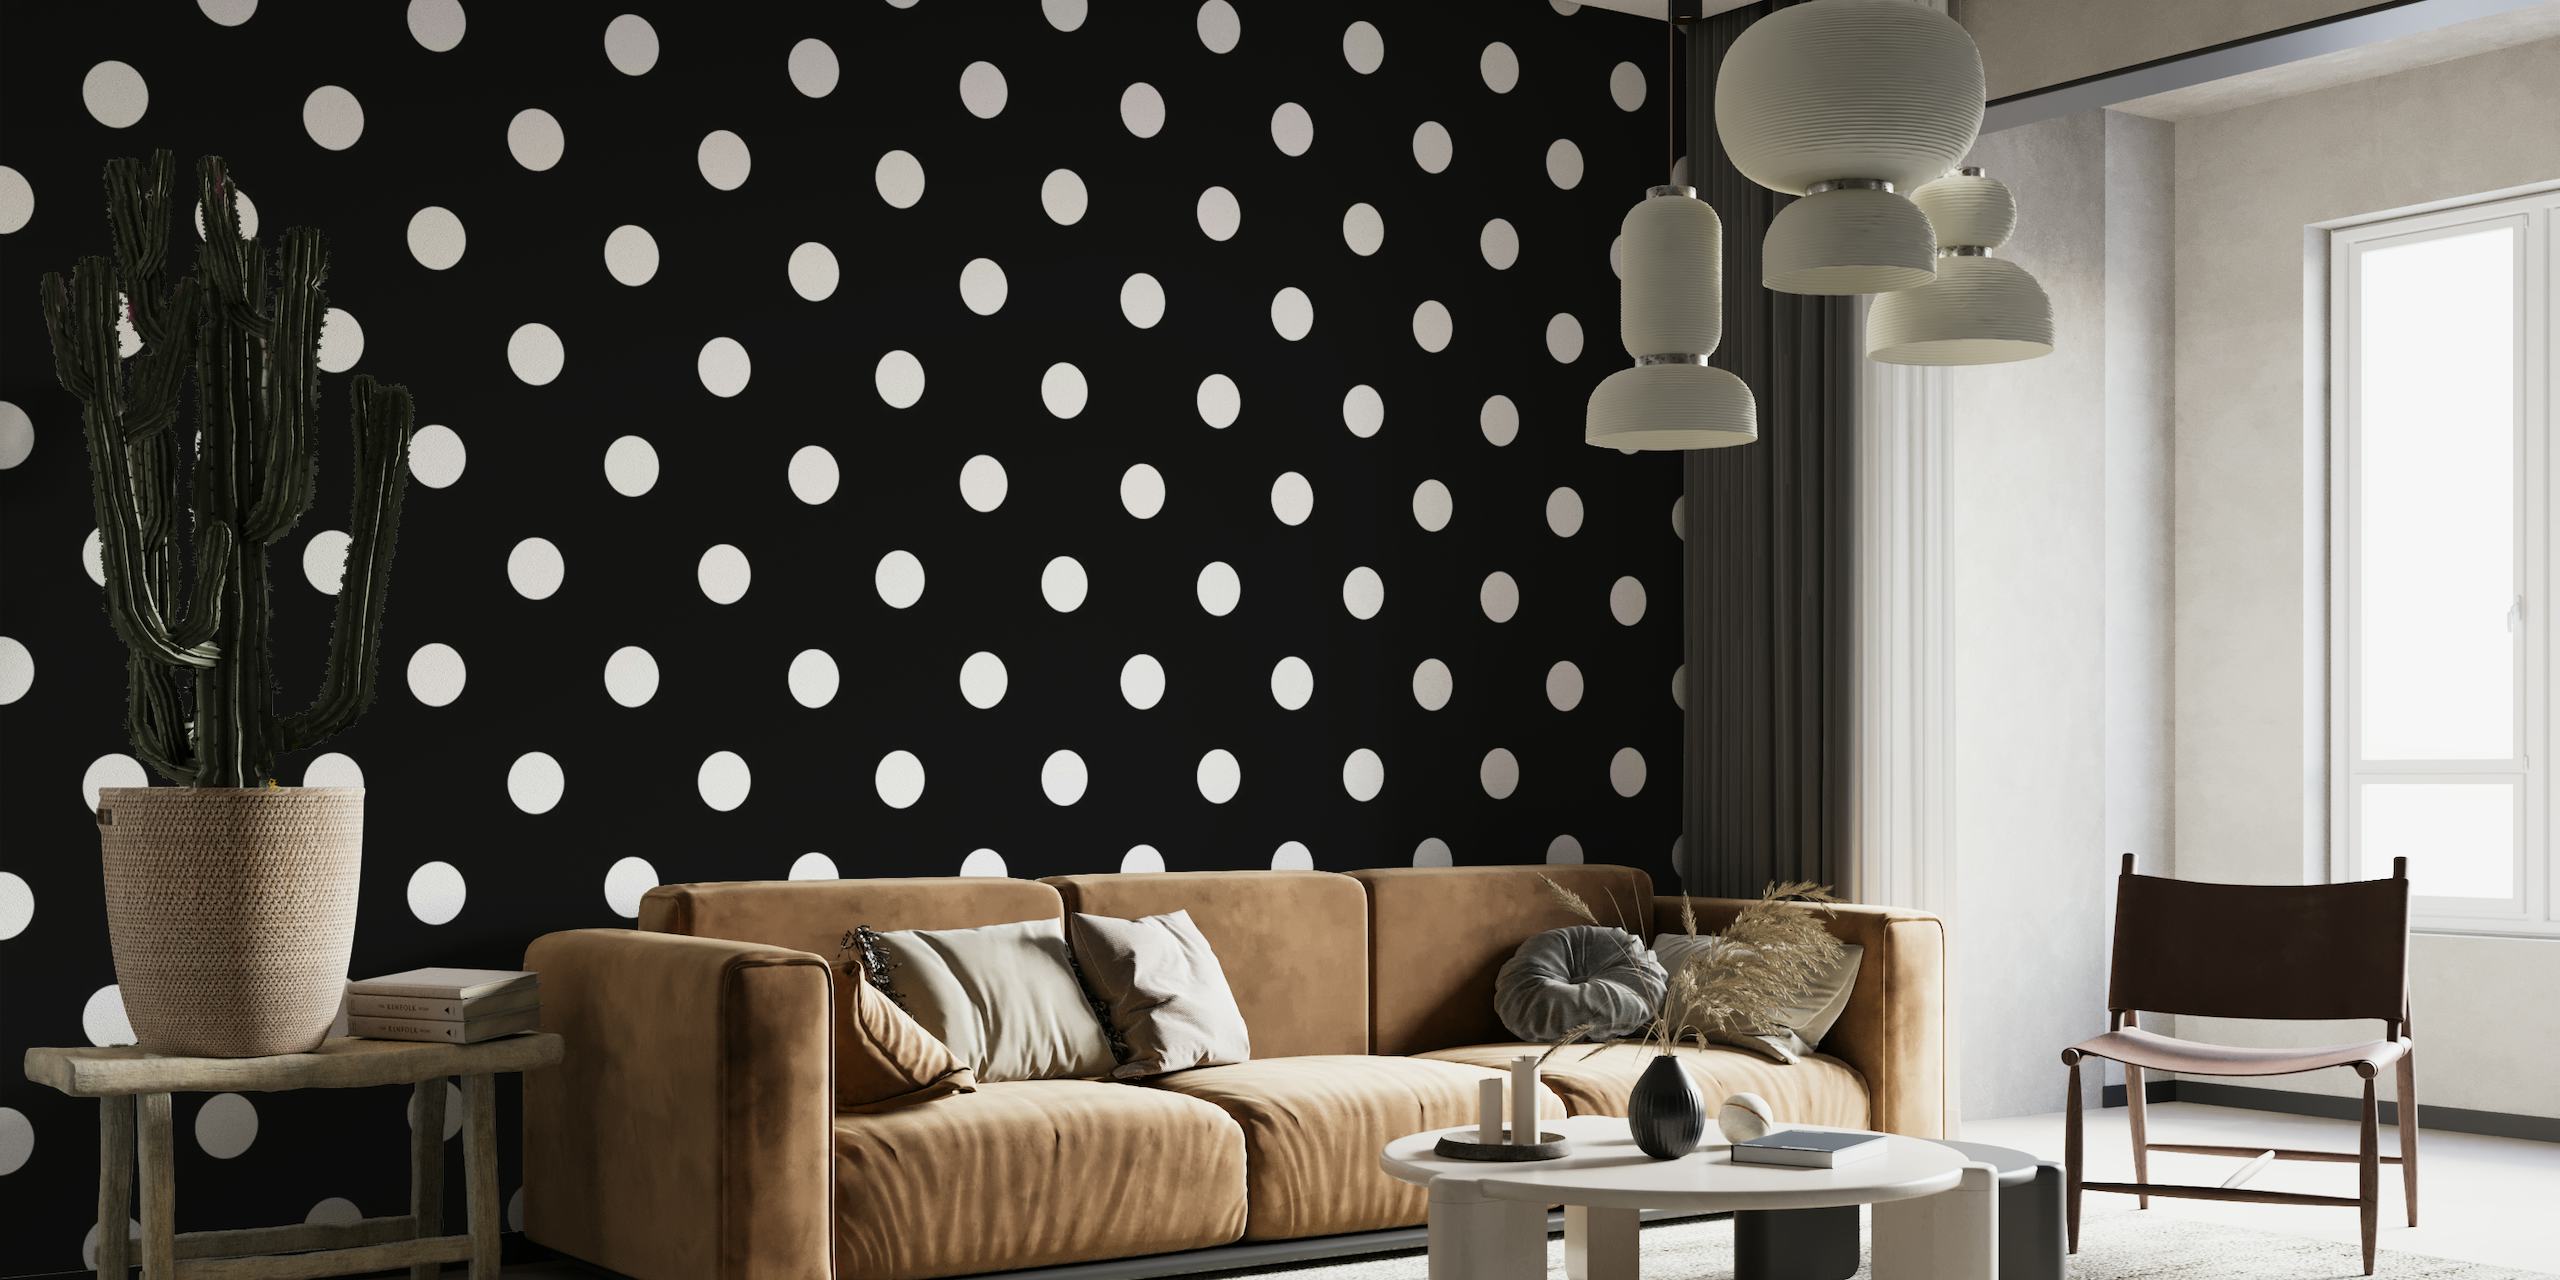 Black and white dots wallpaper 3 papel pintado